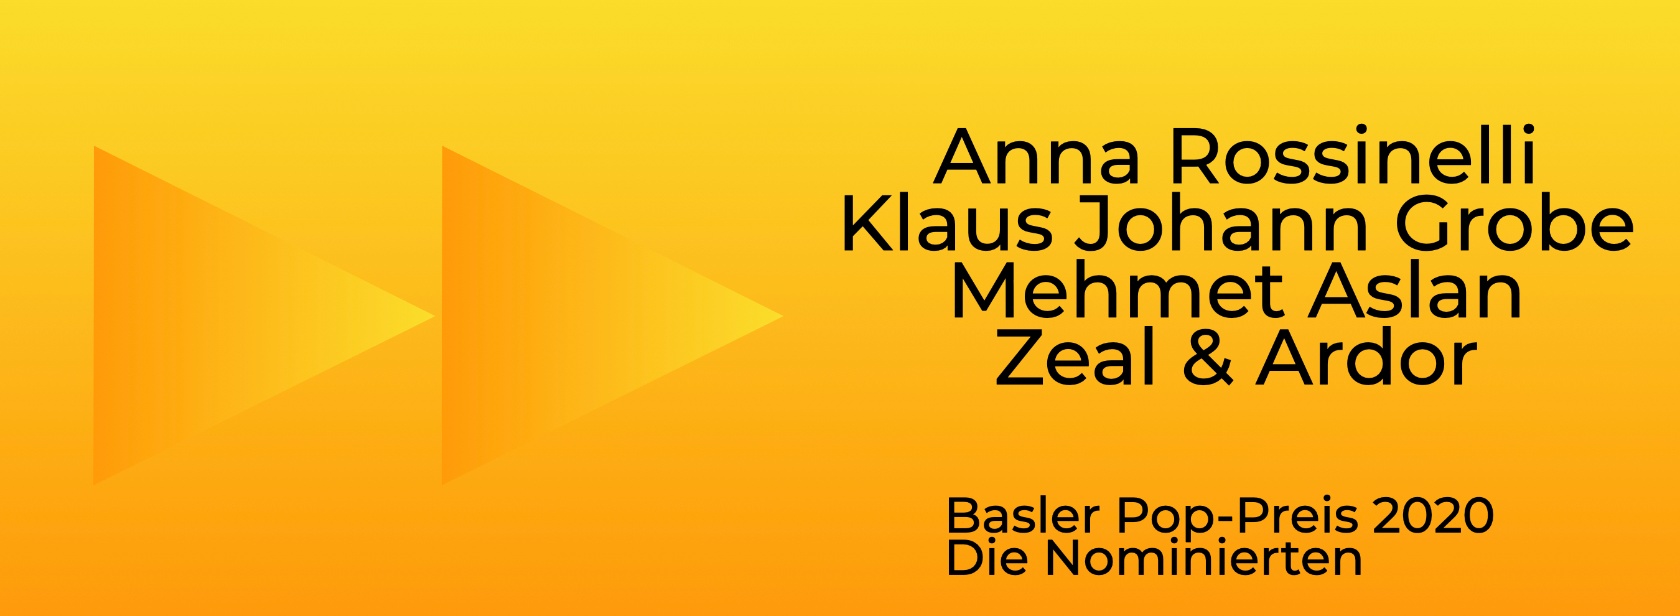 Basler Pop-Preis Nominierte Banner